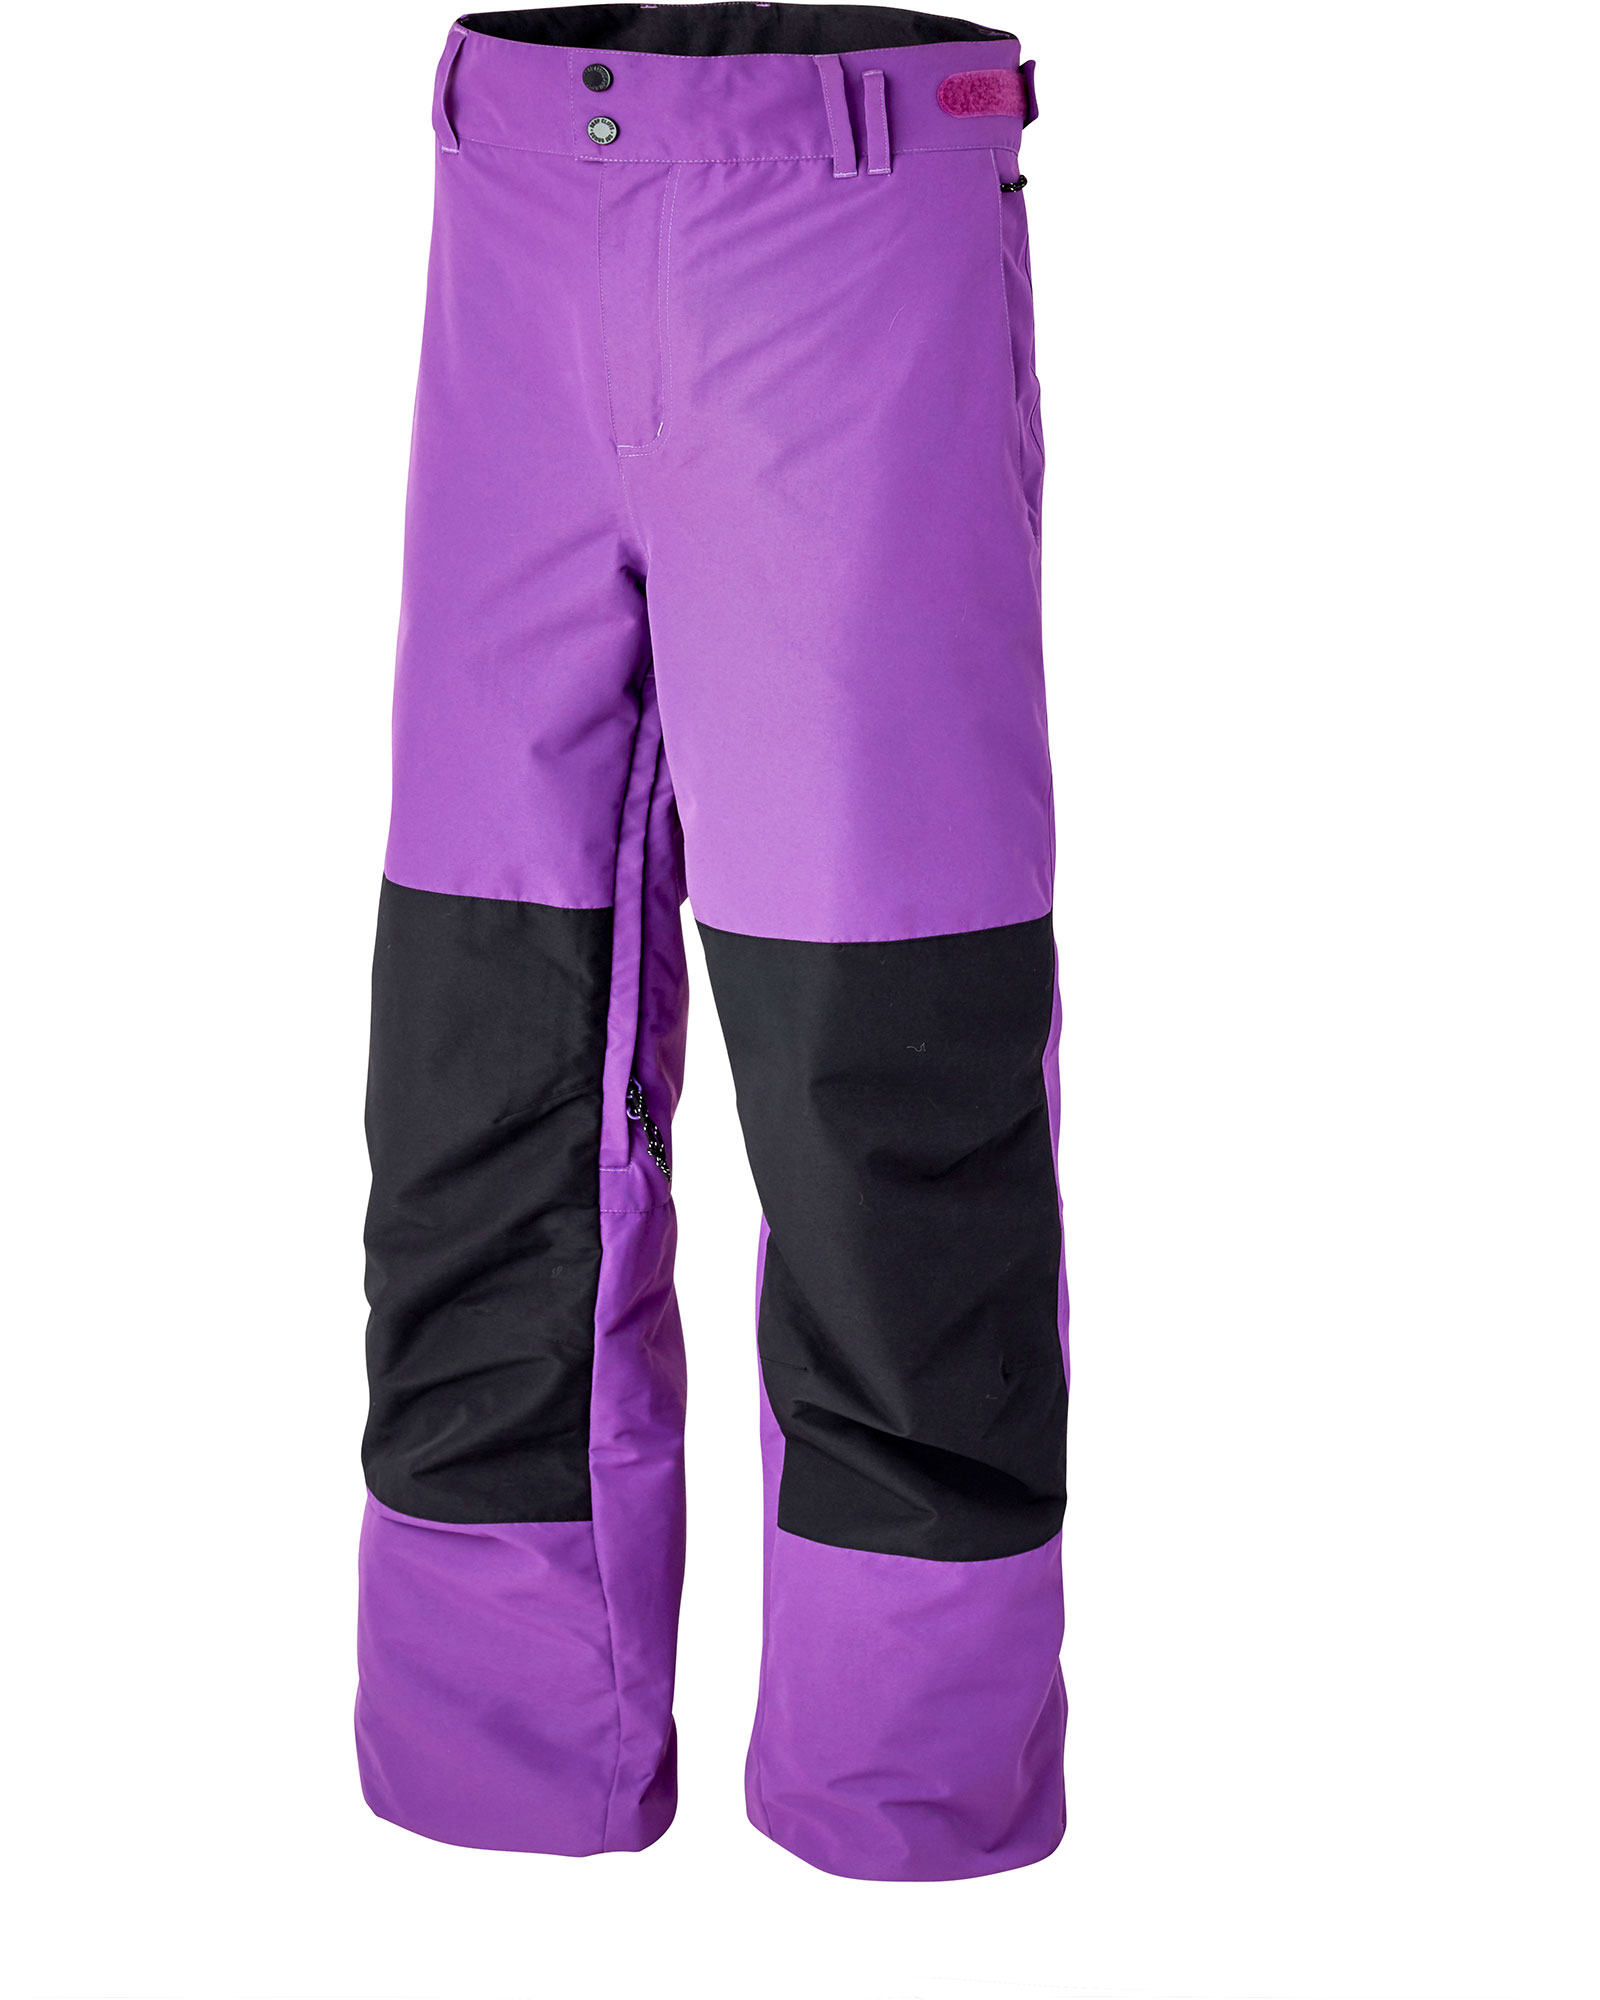 Planks Easy Rider Men’s Pants - Purple S